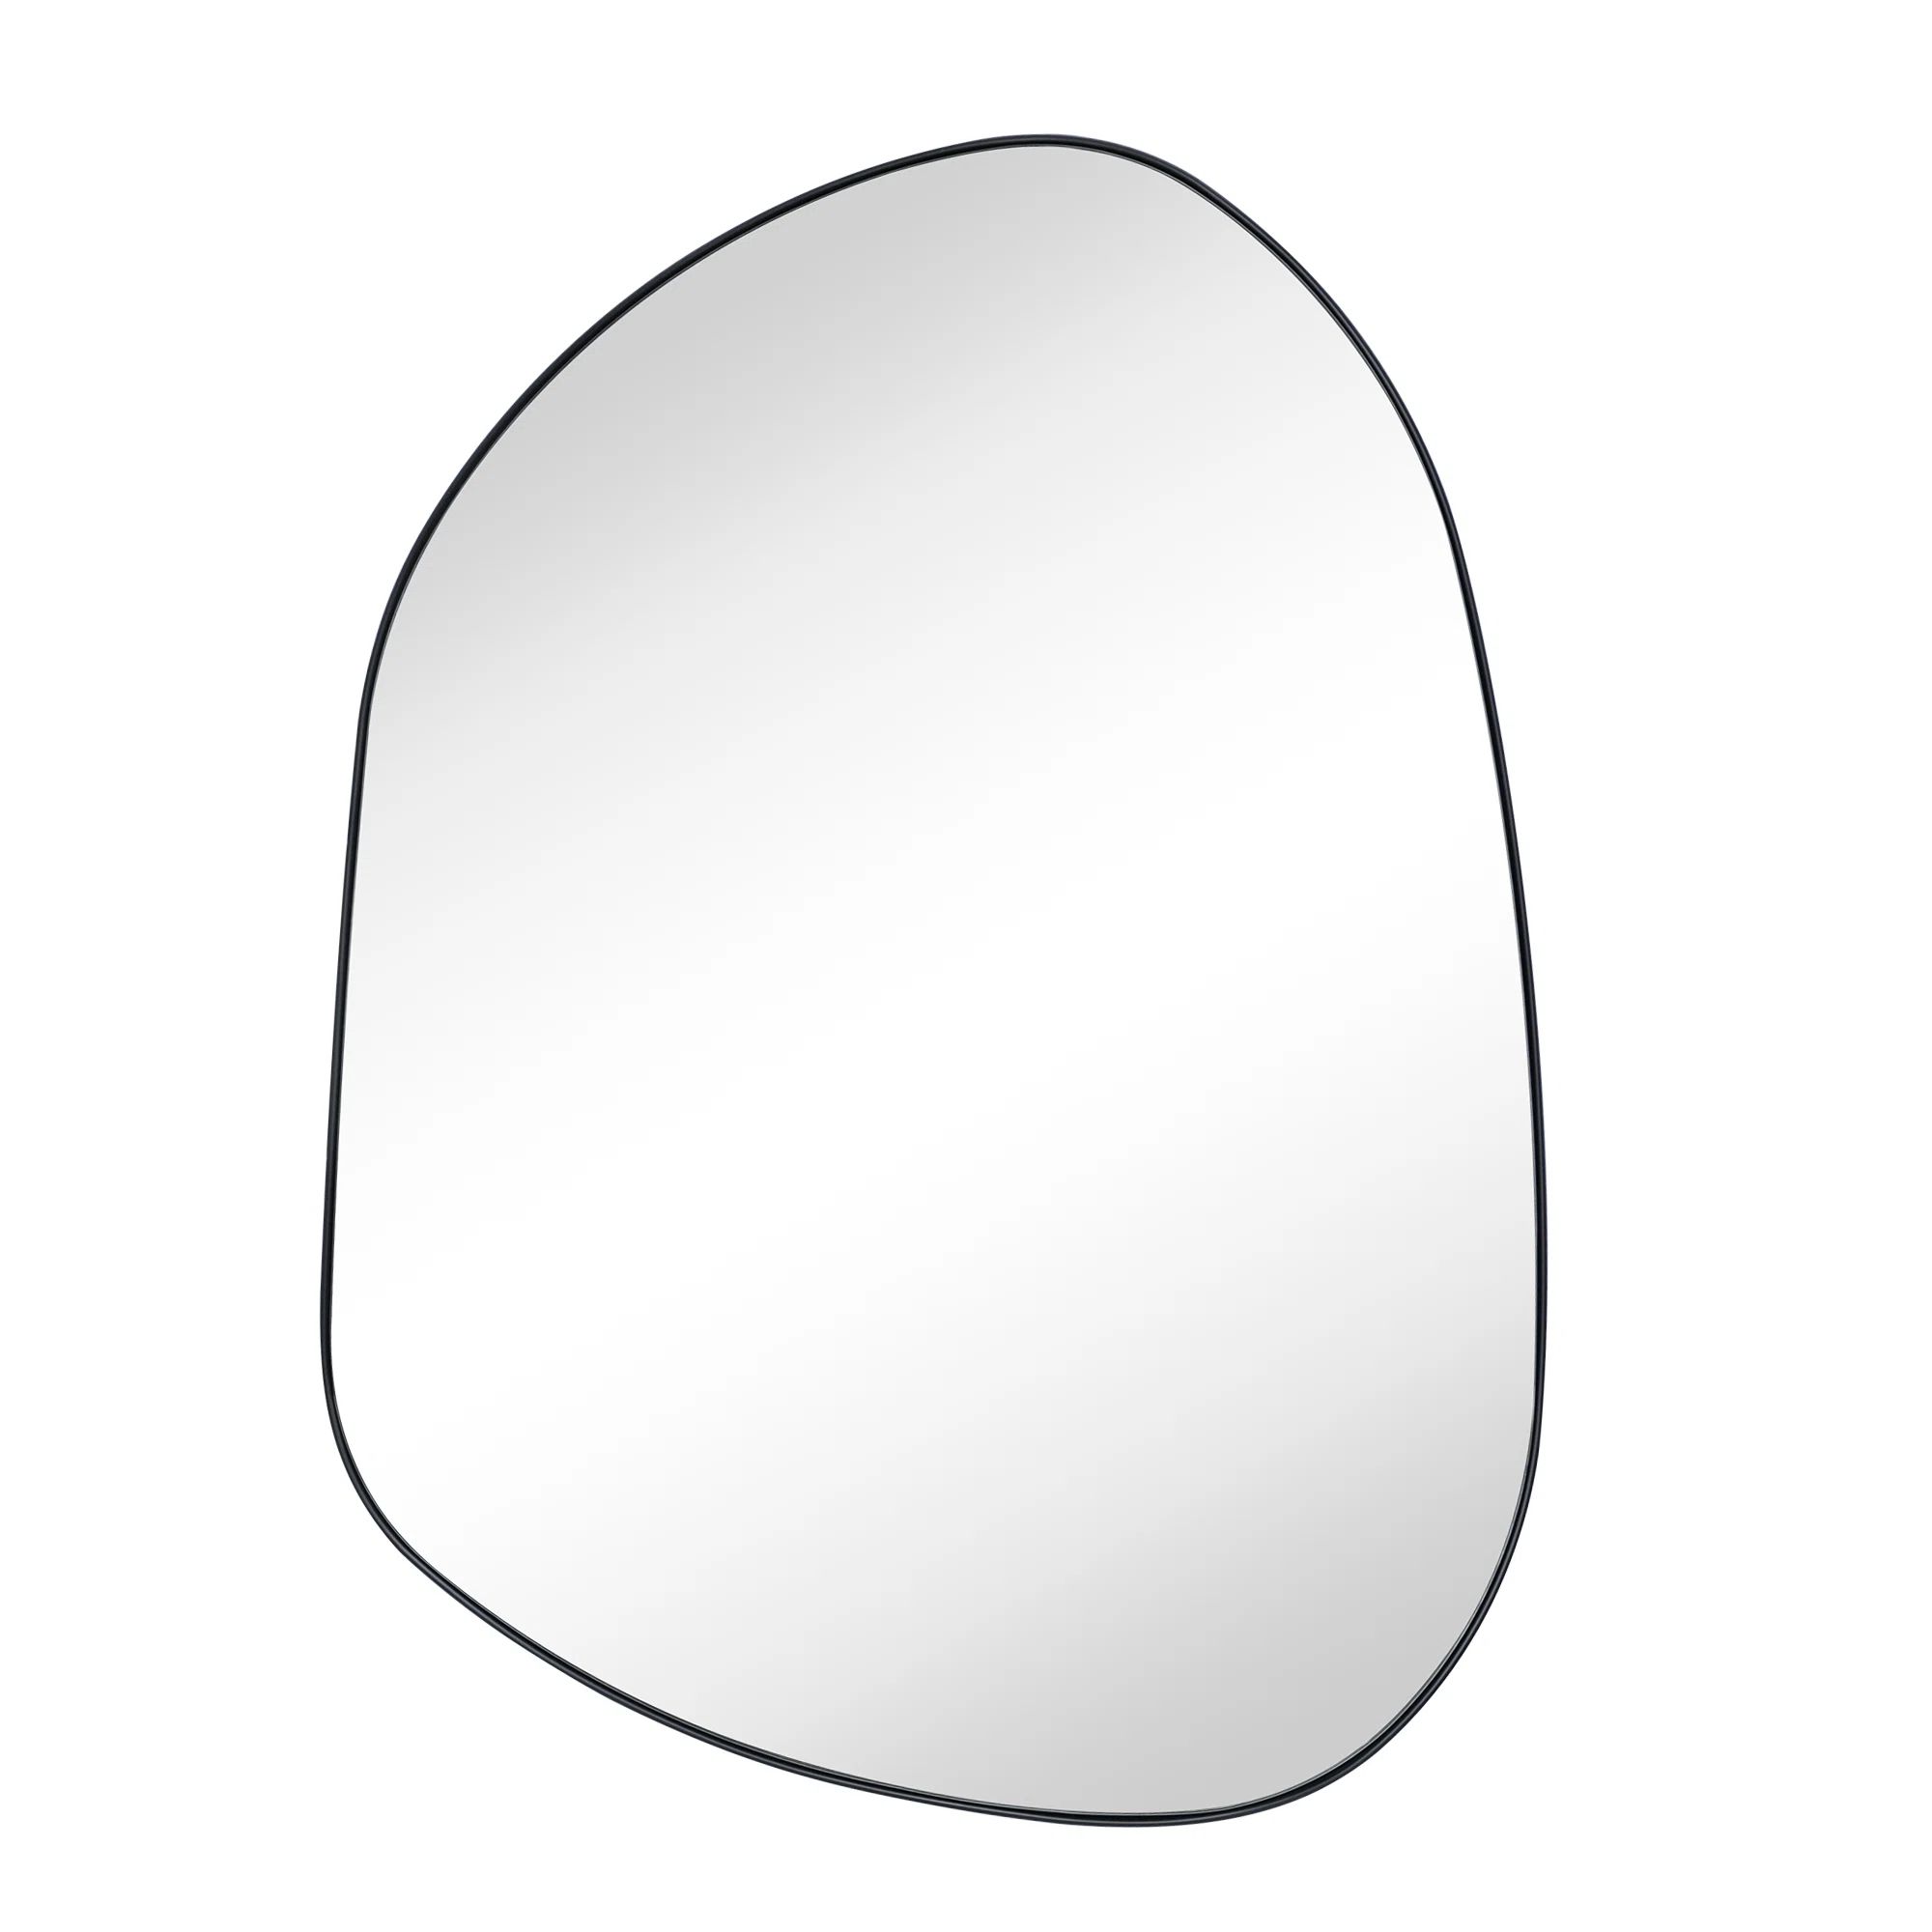 Bertlinde asymmetrical wall mirror irregular shaped mirror for living room, bathroom or entry | Wayfair North America